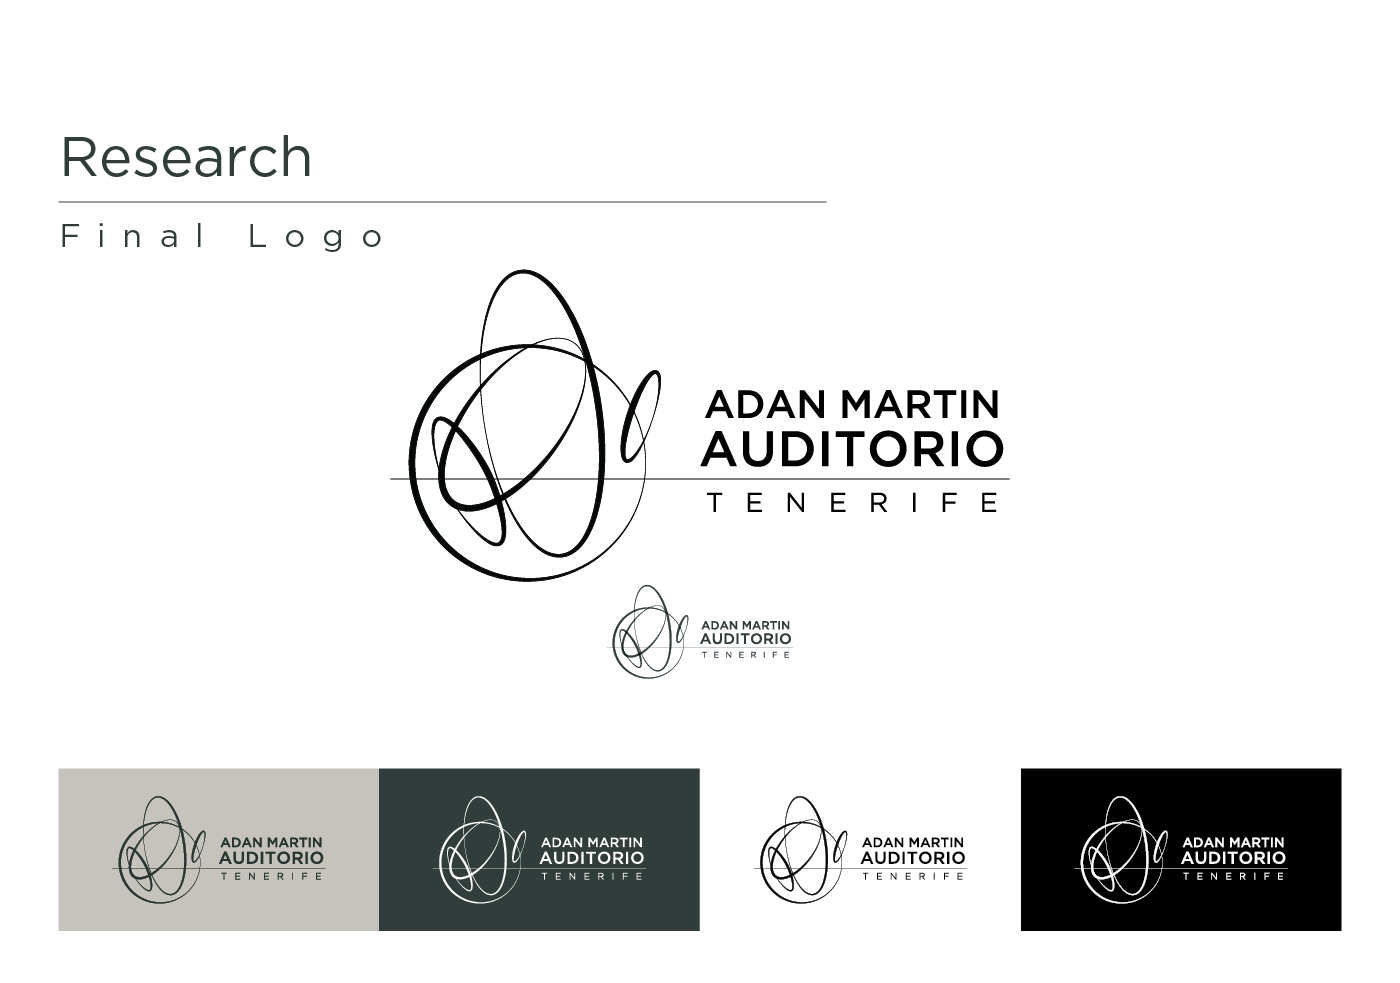 tenerife adan martin auditorio Visual Communication design visual identity Santiago Calatrava calatrava architect identity Dynamic logo grid presentation